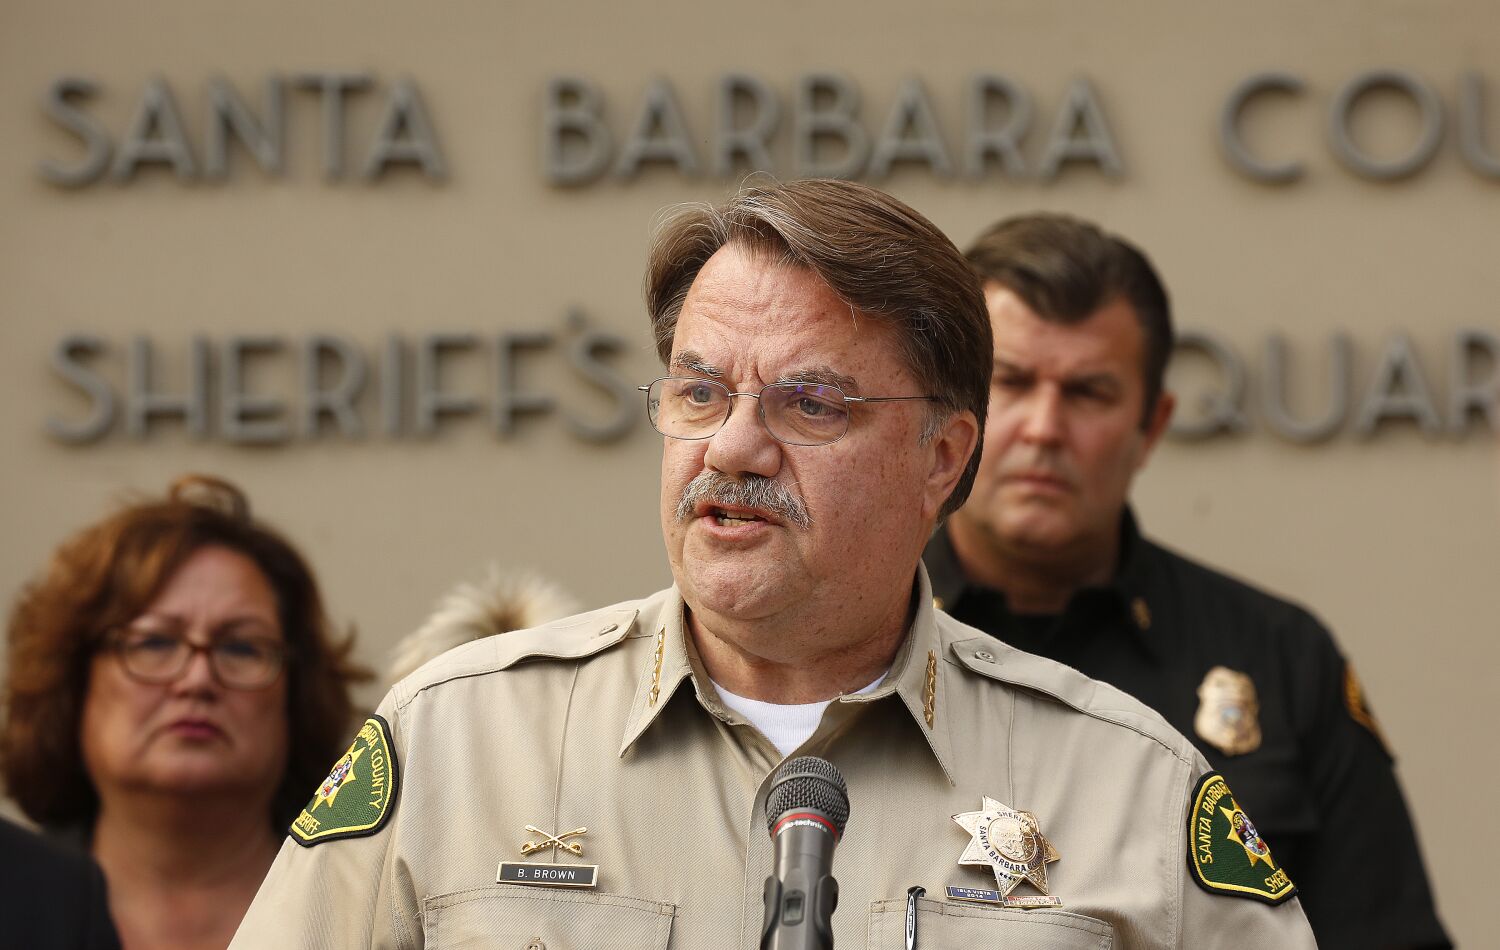 An investigation is underway in Santa Barbara County